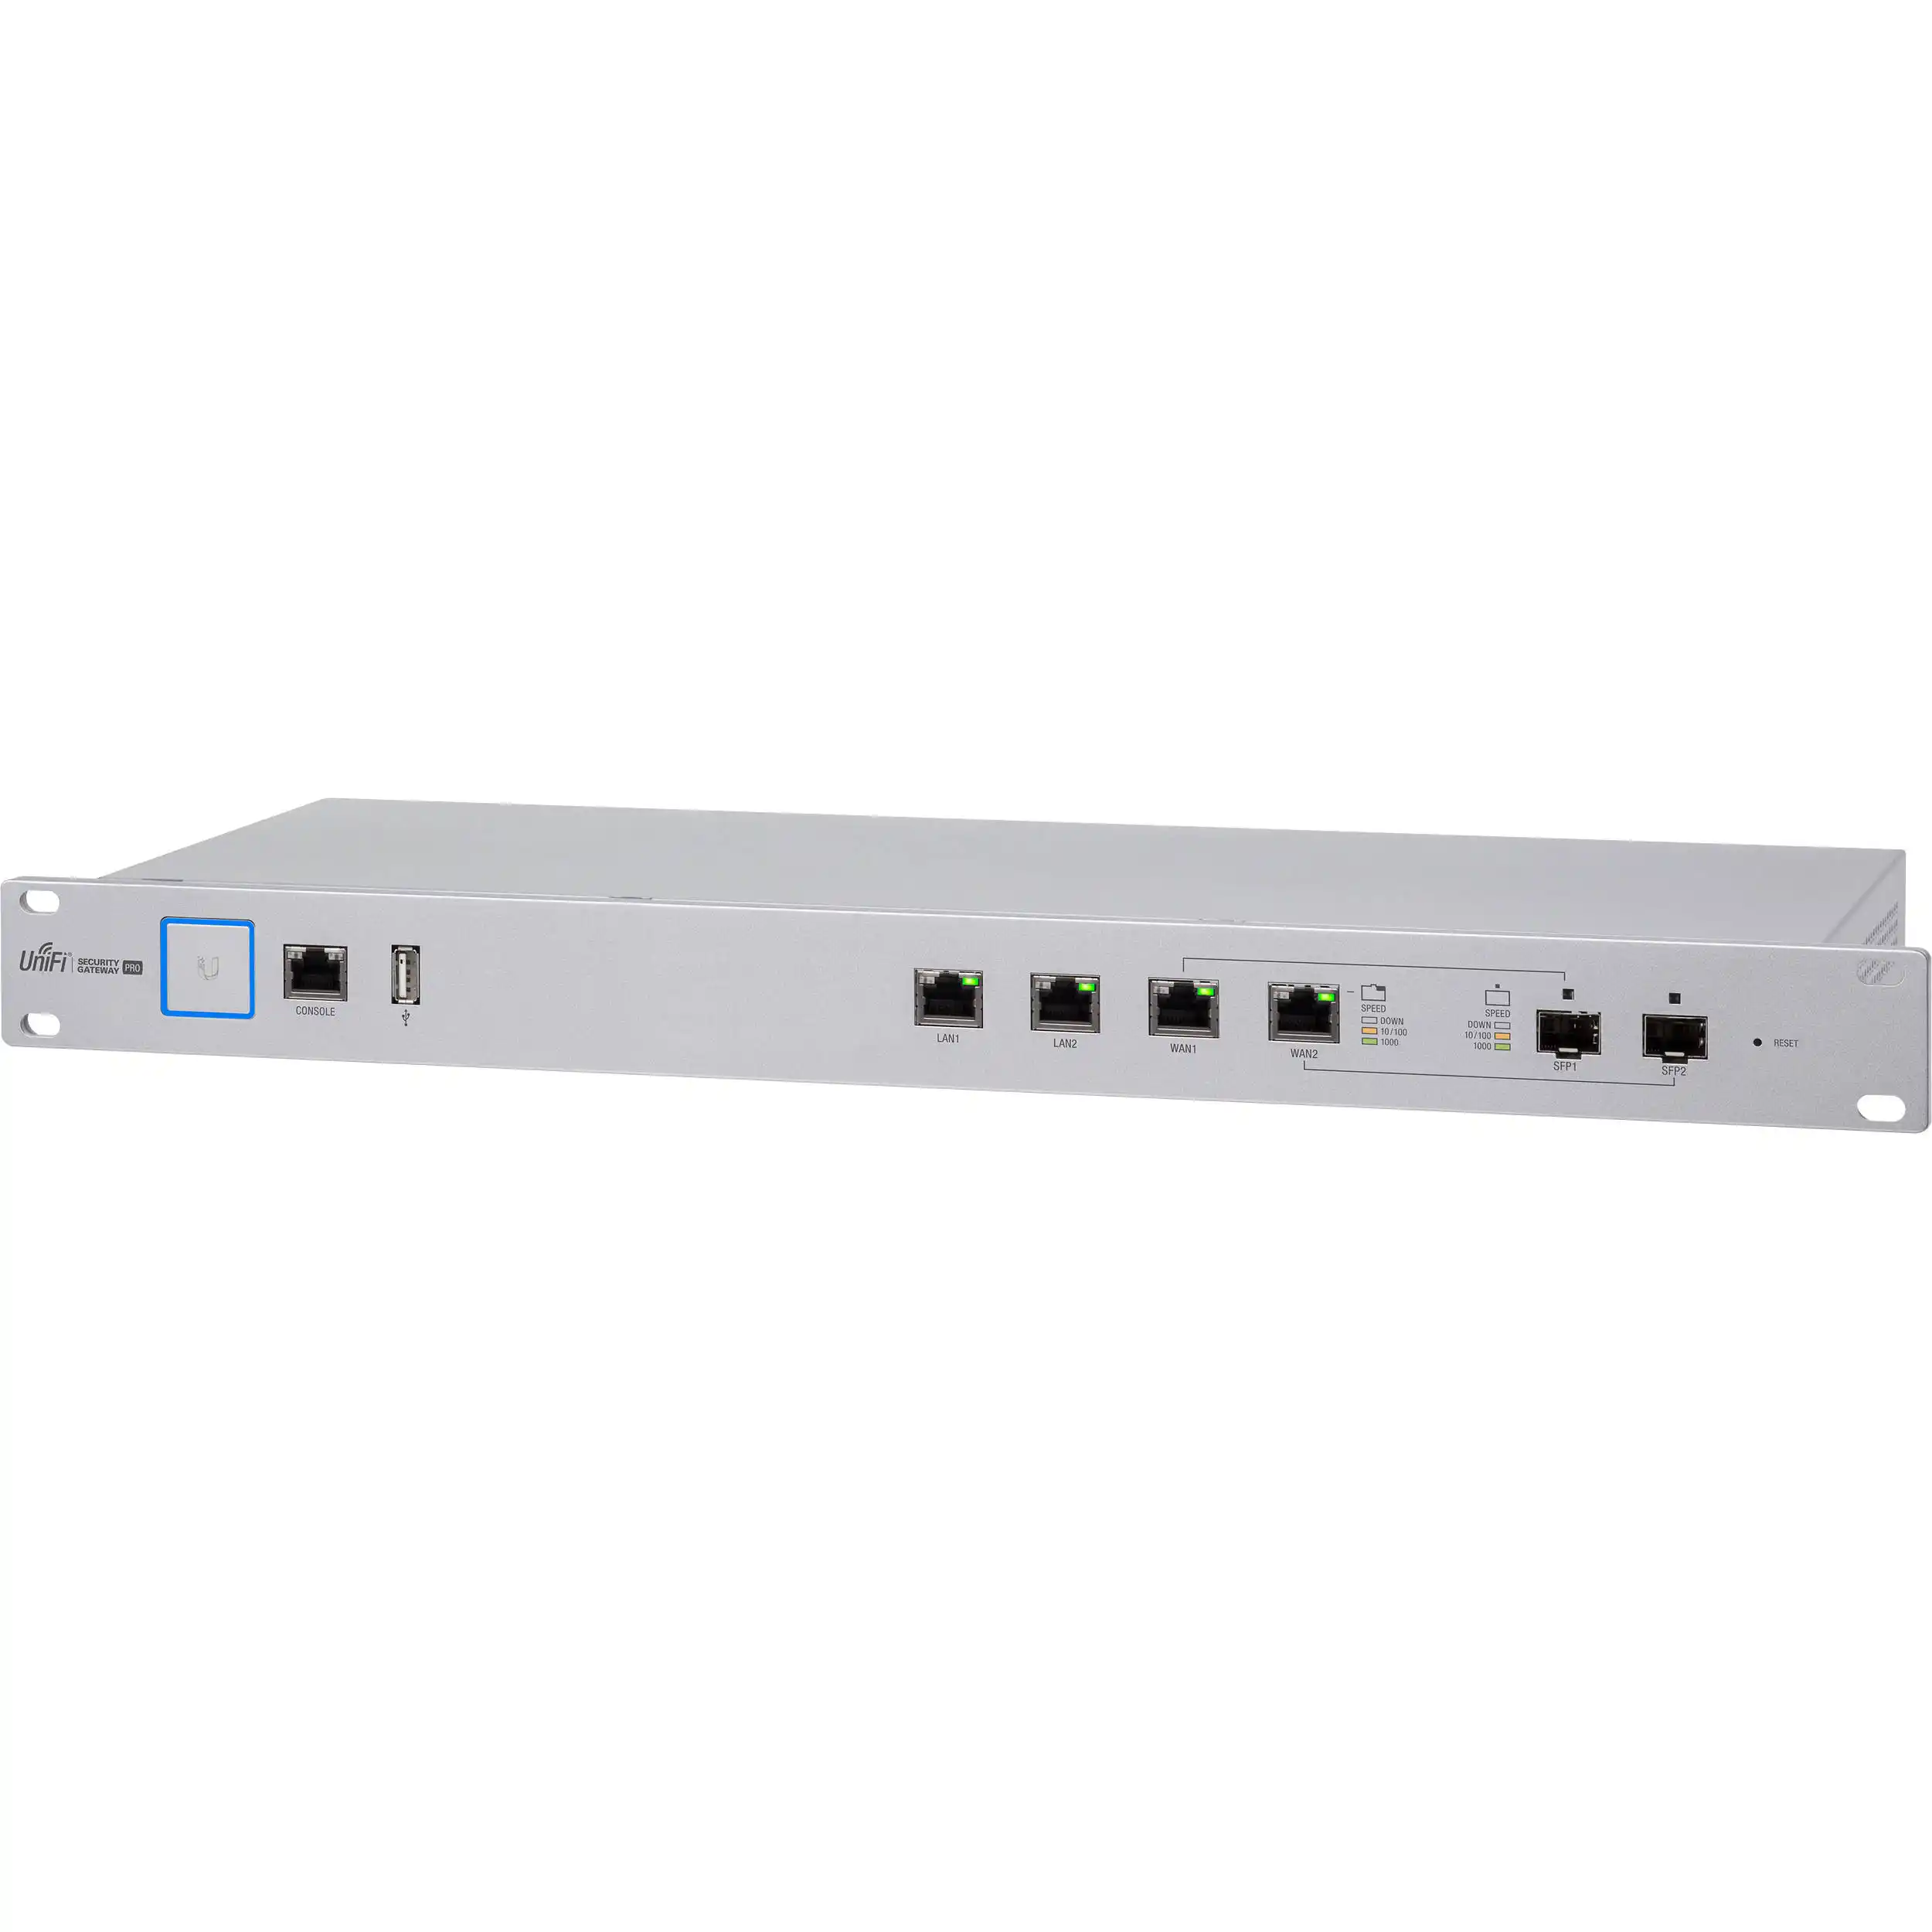 USG-PRO-4 UniFi Security Gateway Pro, 4-port